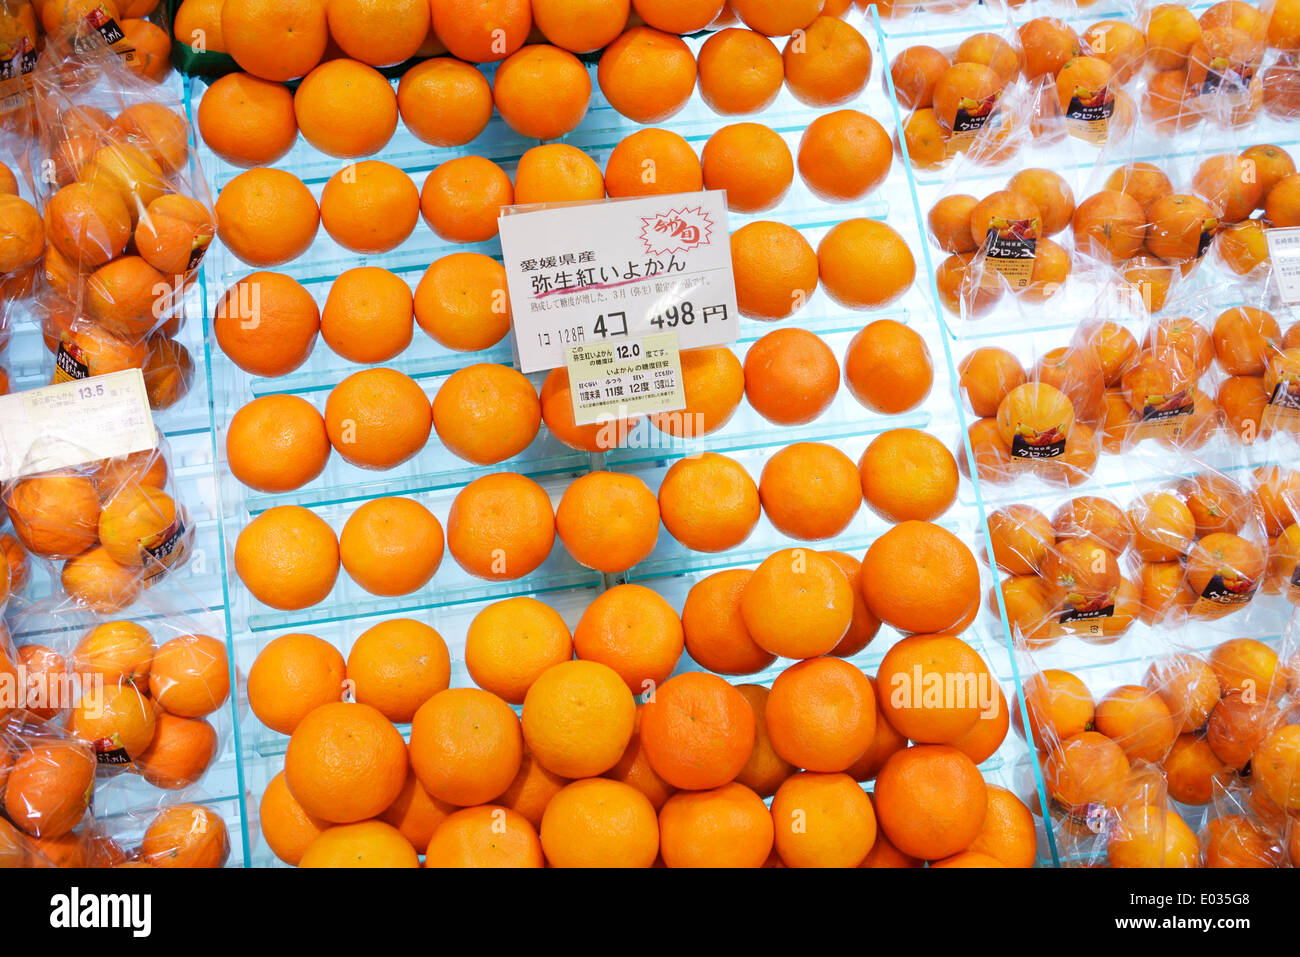 https://c8.alamy.com/comp/E035G8/fruits-oranges-on-display-in-a-japanese-supermarket-tokyo-japan-E035G8.jpg